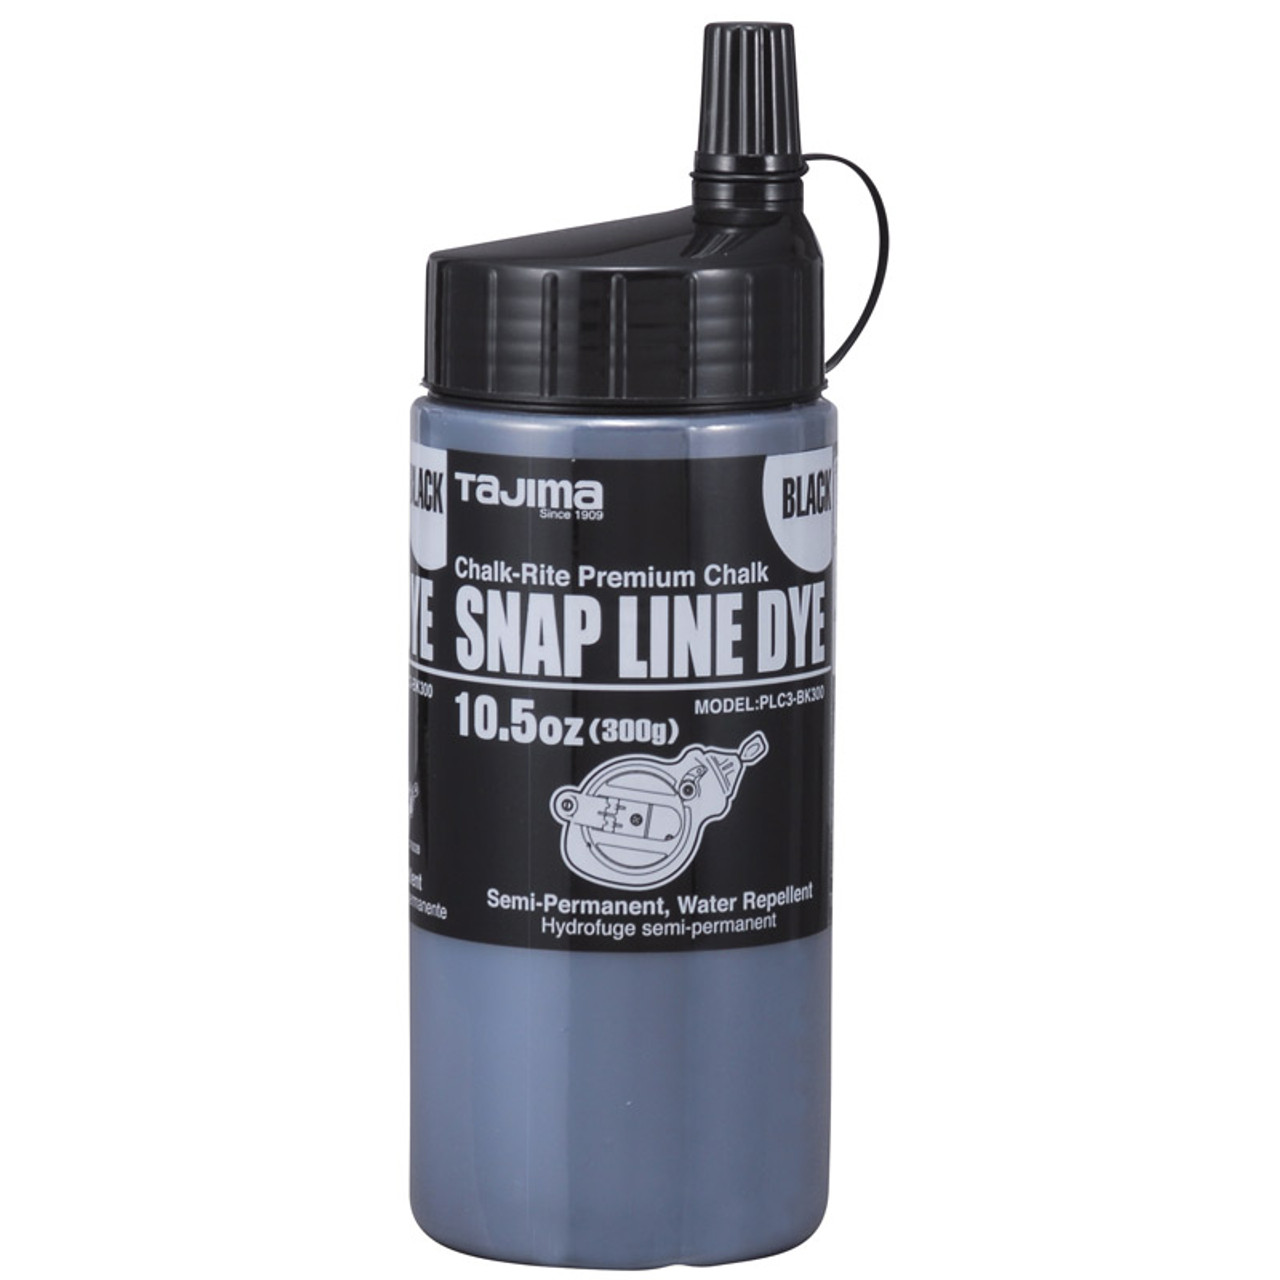 Tajima Snap-Line Dye Semi-Permanent Snap-Line Chalk - Black